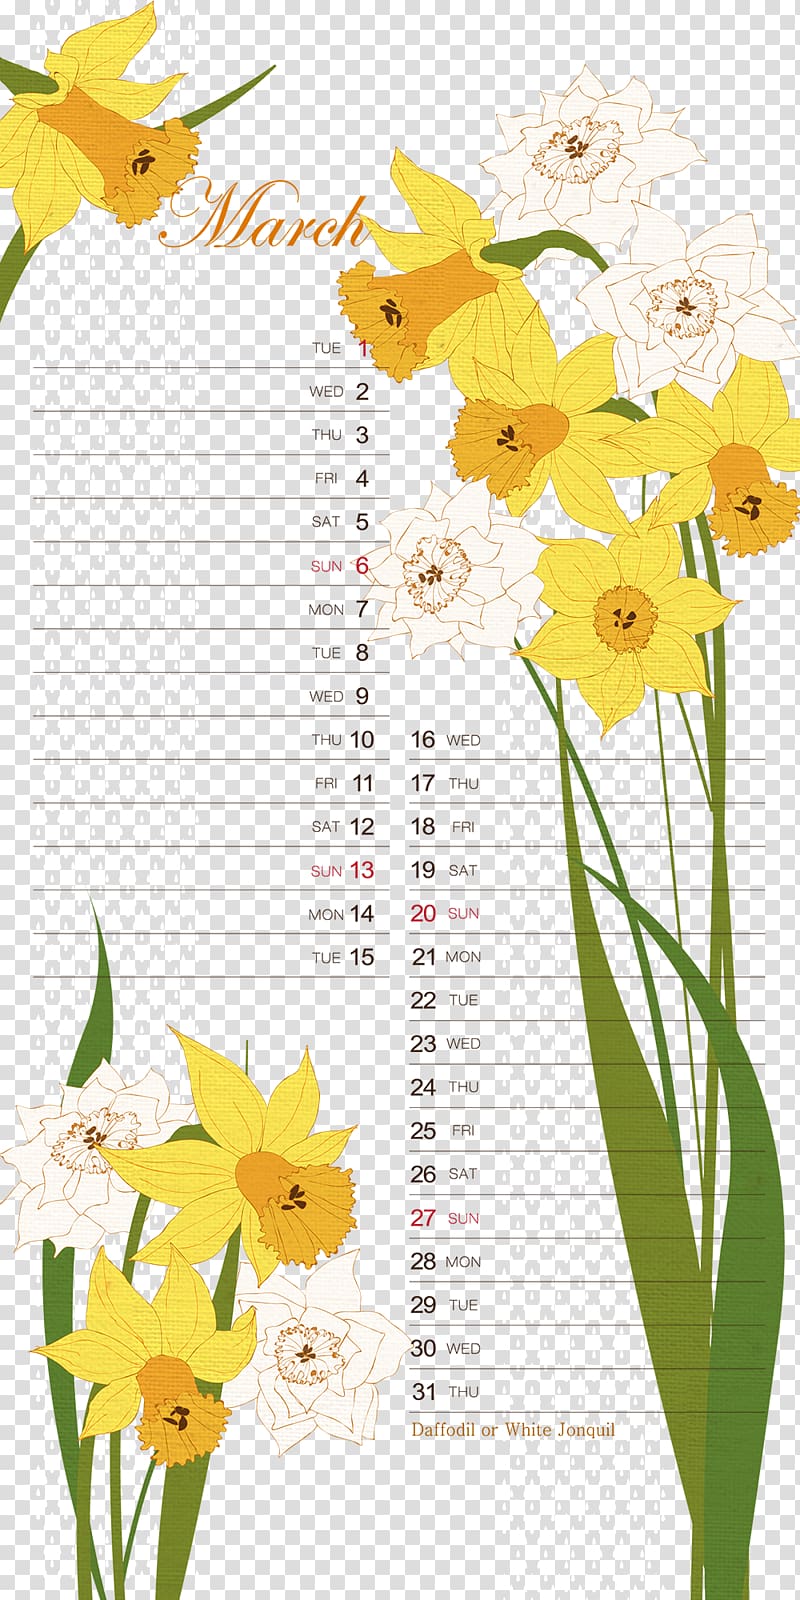 Calendar Flower Illustration, March calendar background pattern template transparent background PNG clipart